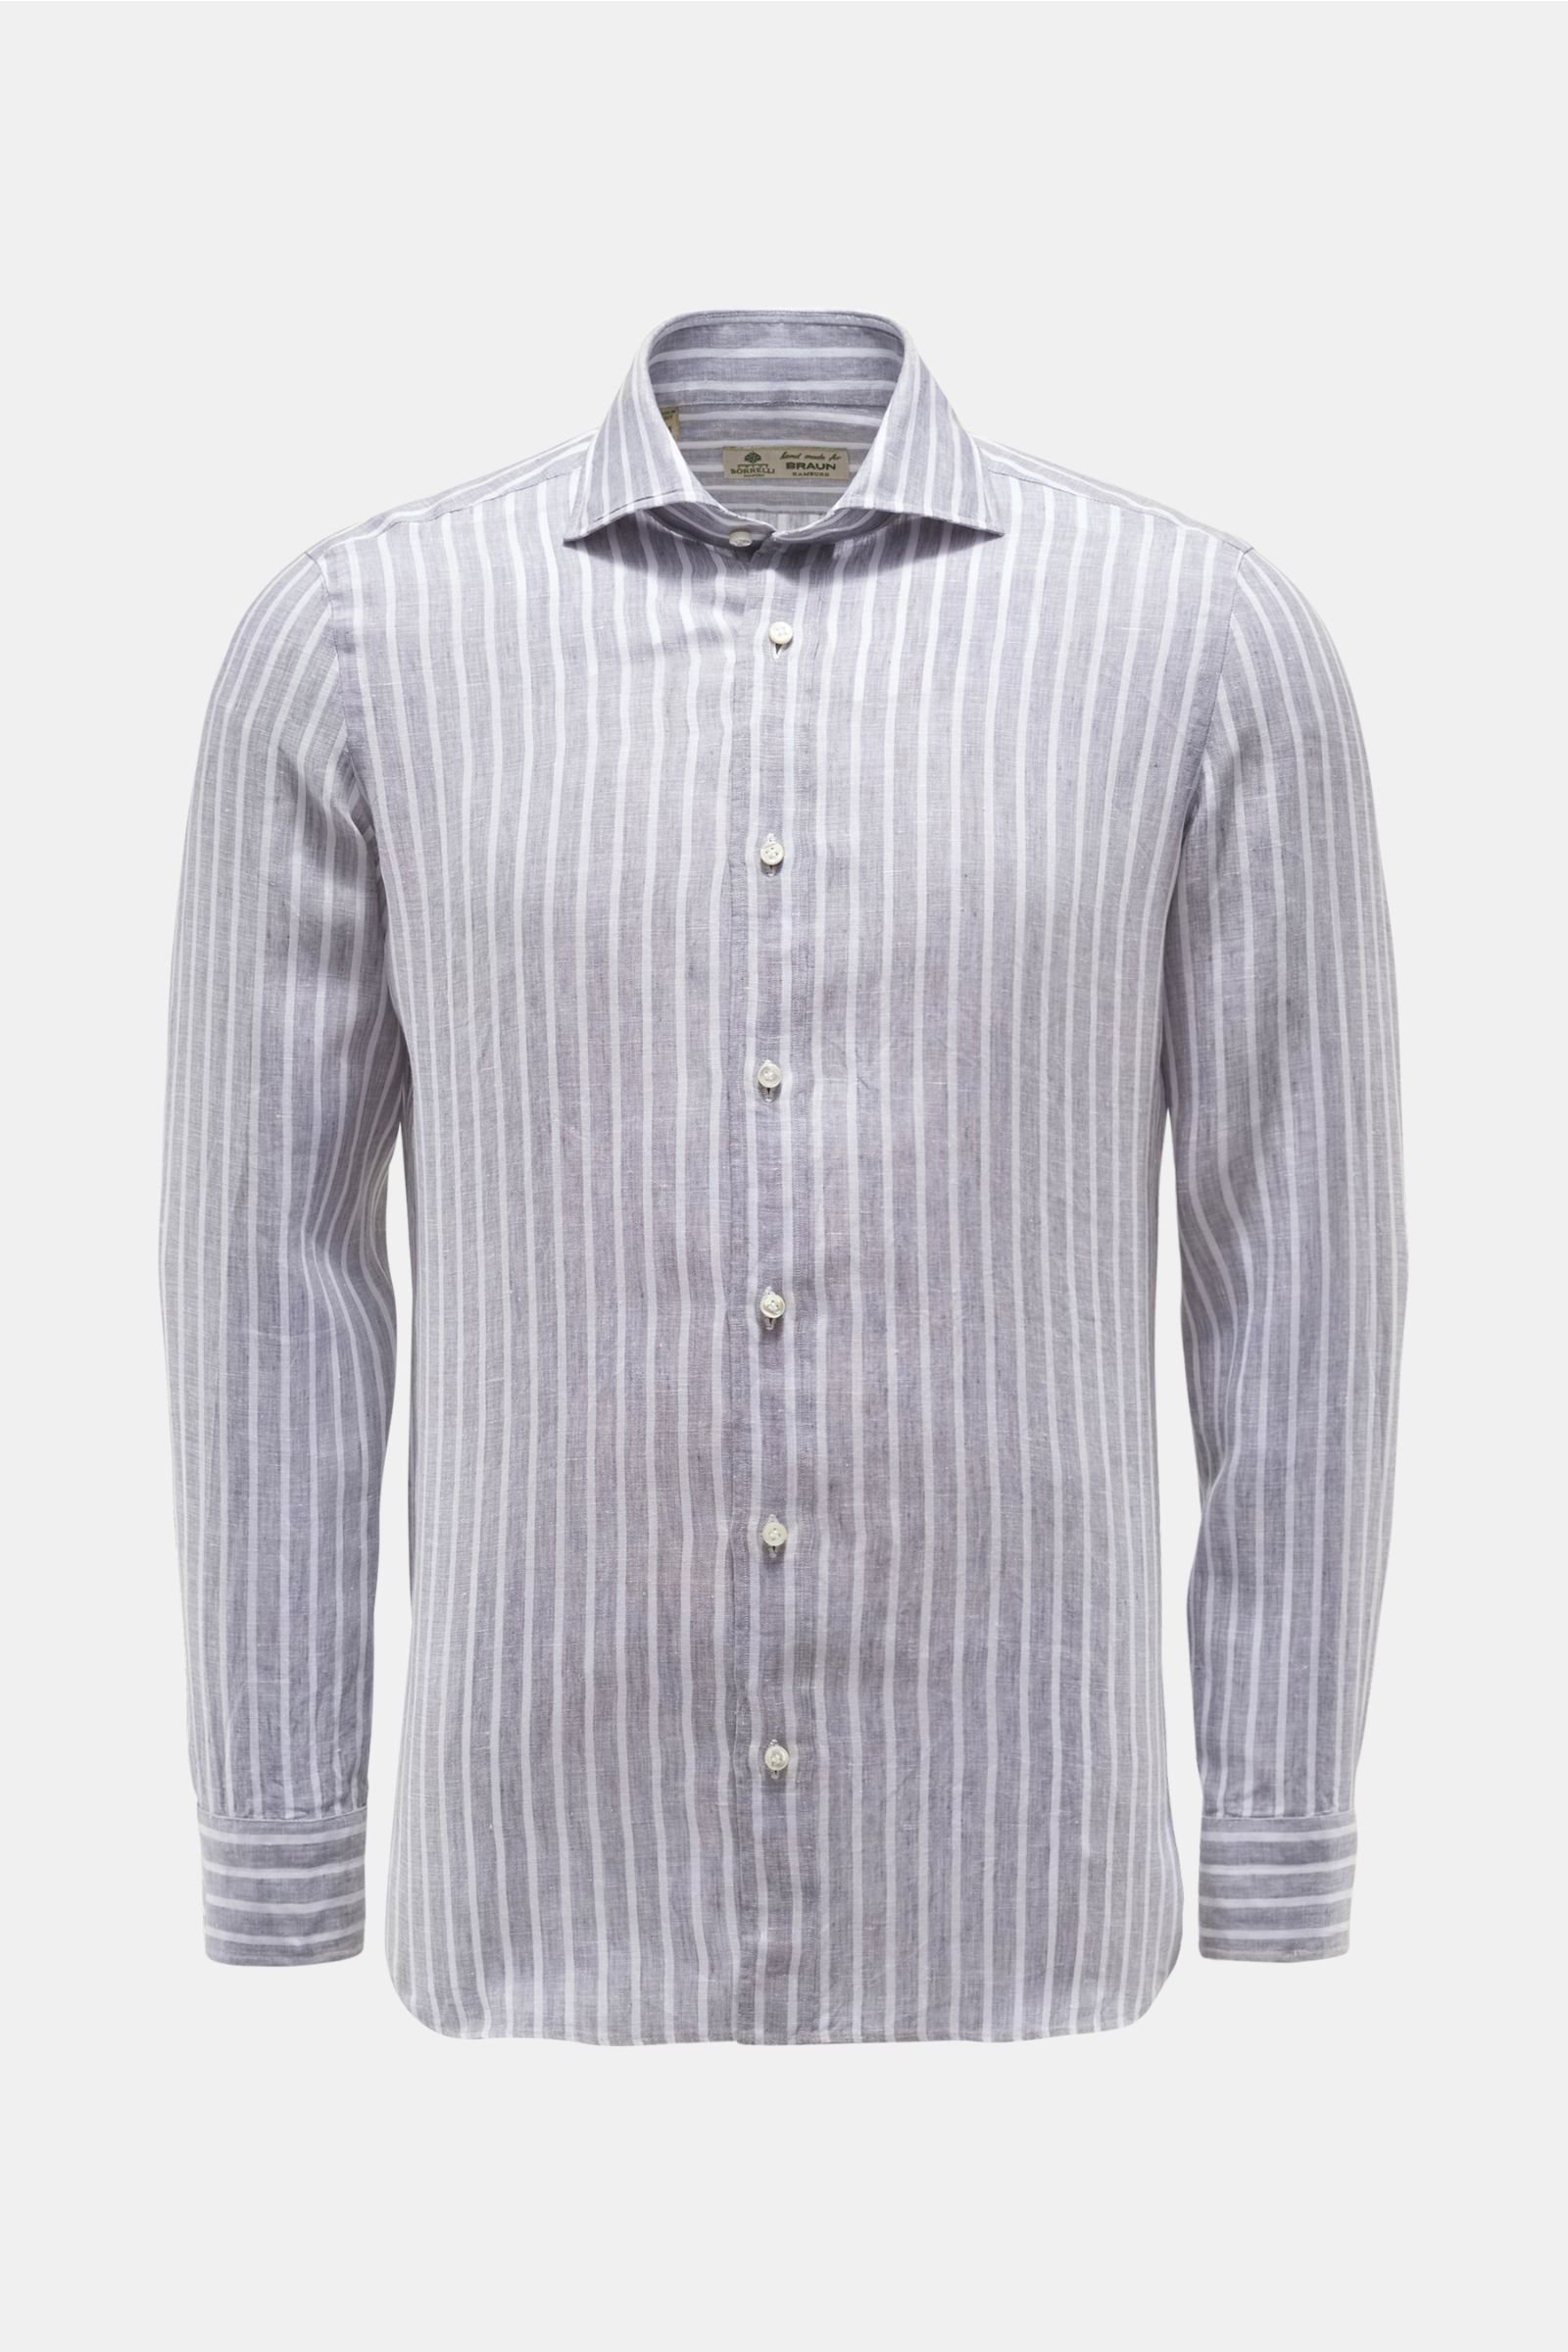 Linen shirt 'Ettore' shark collar grey/white striped